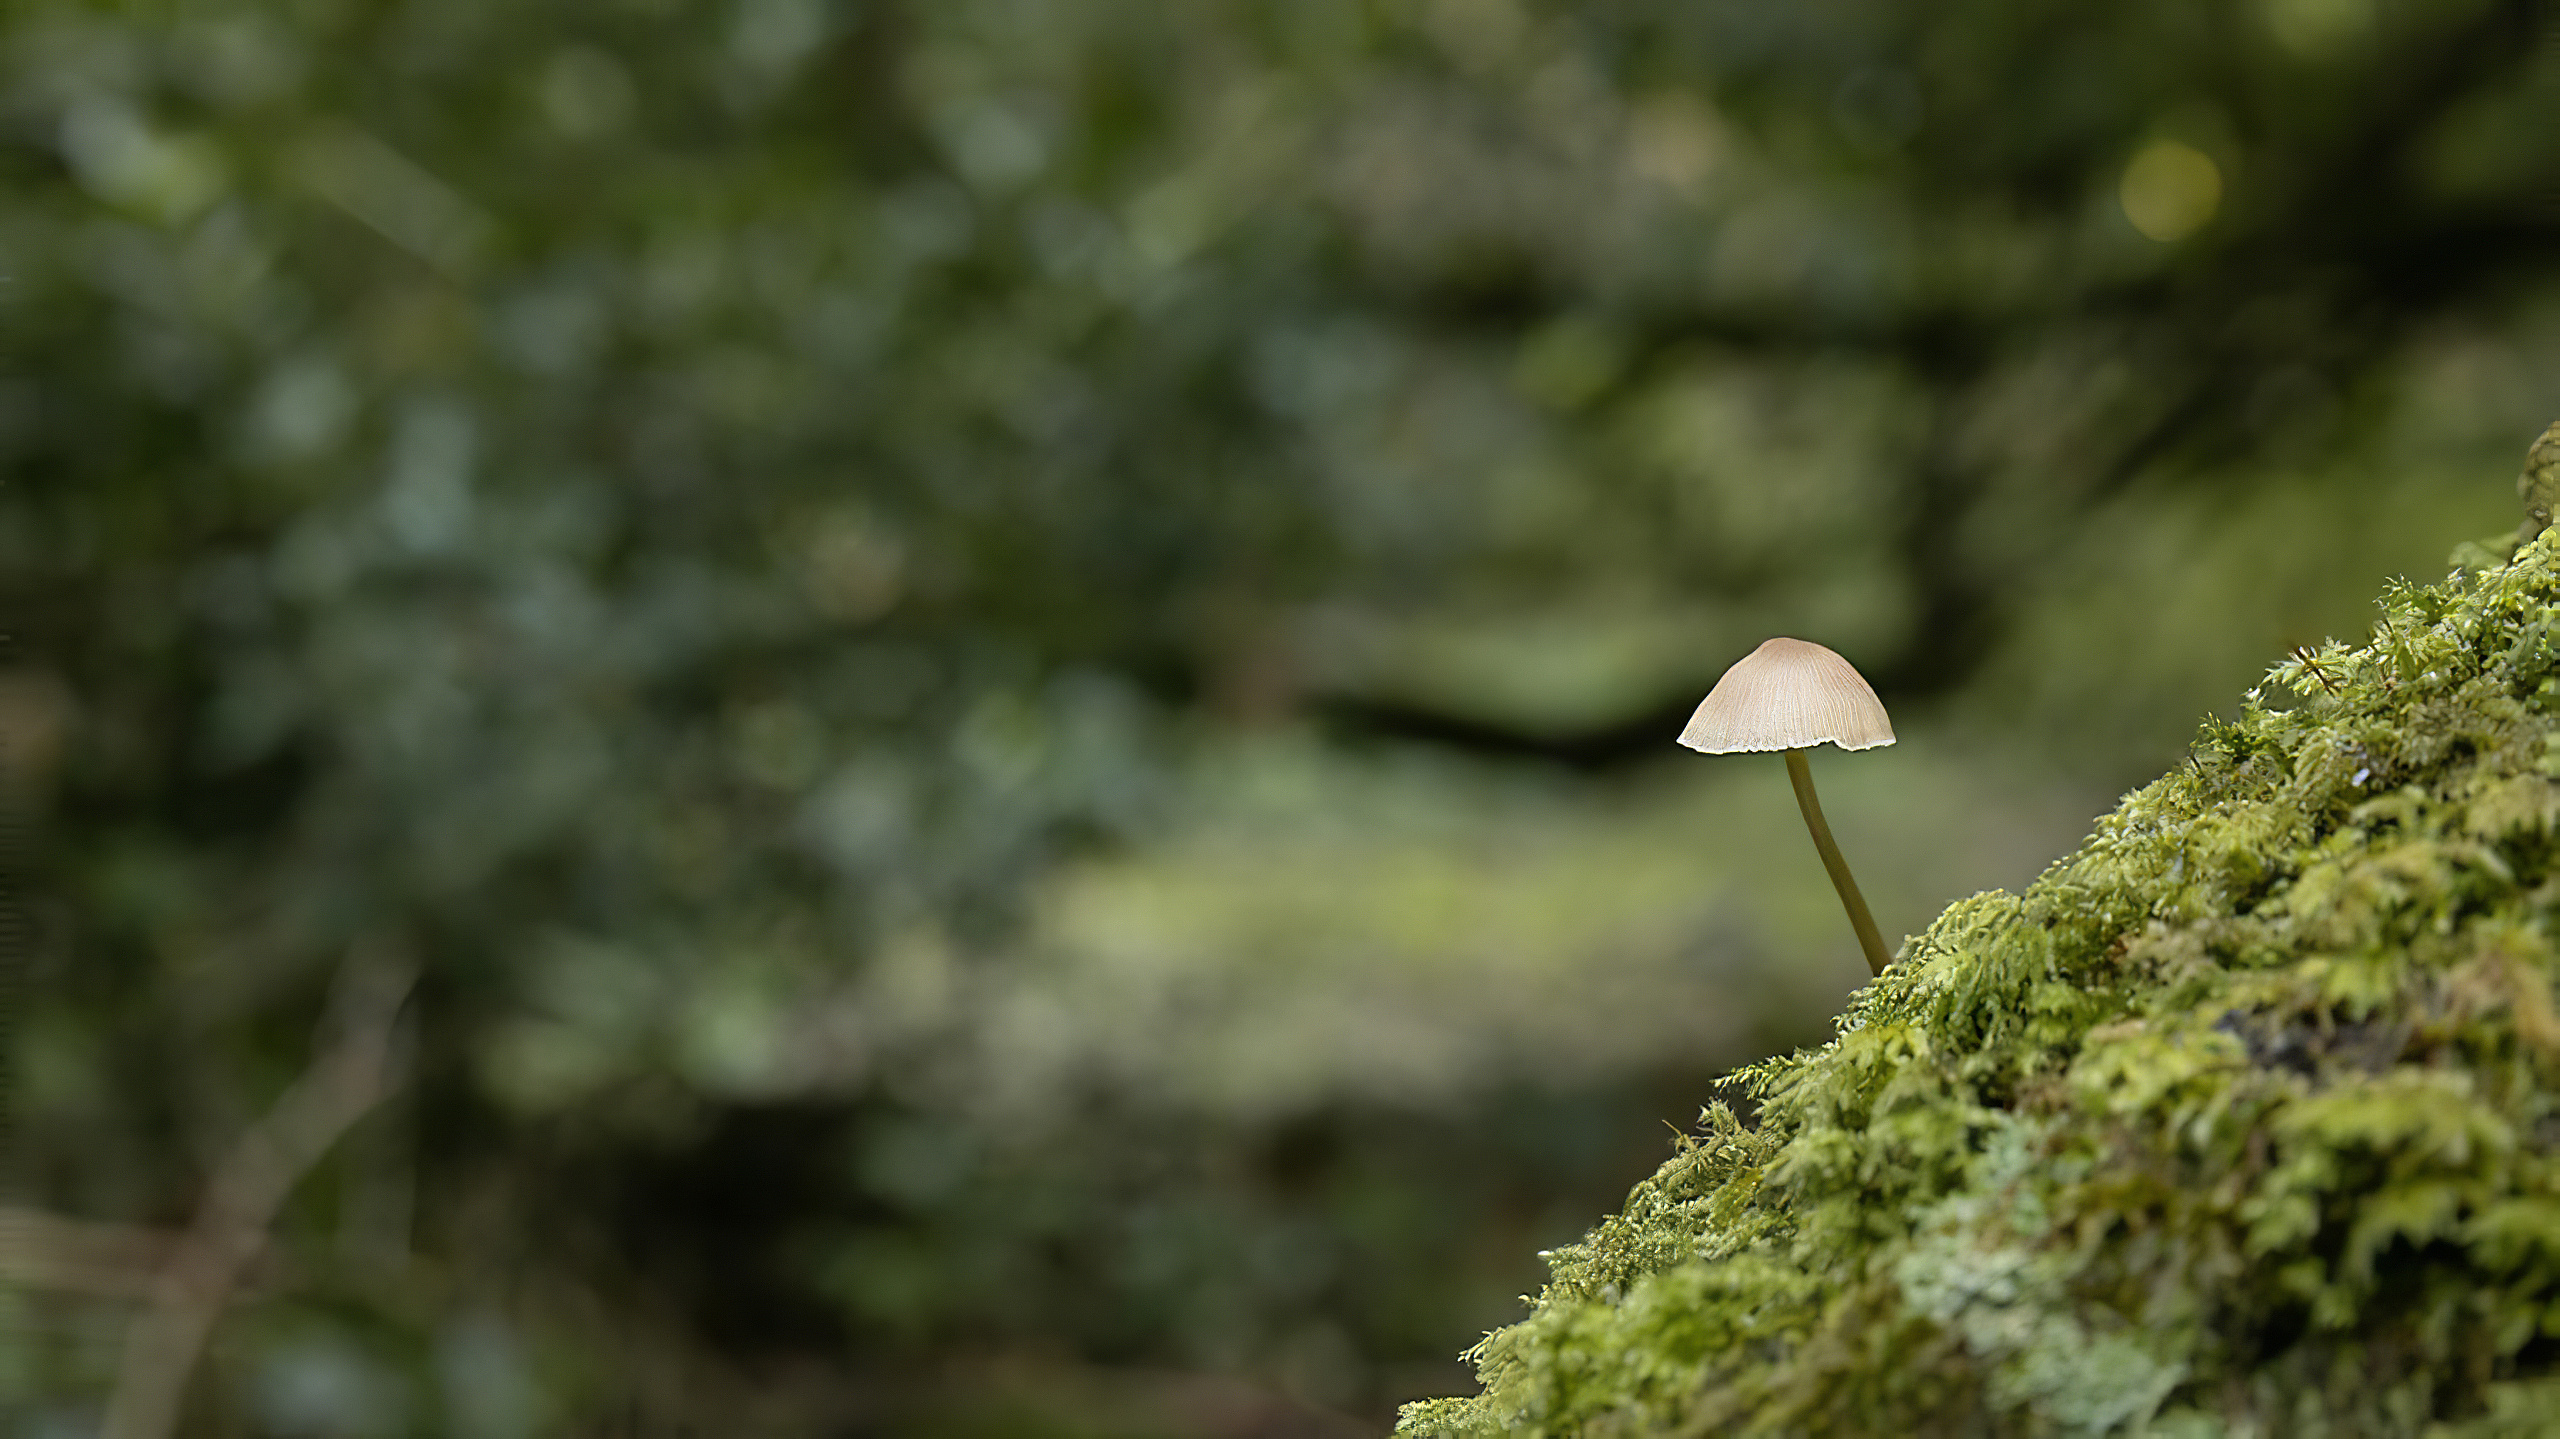 General 2560x1439 forest wood nature green herb mushroom